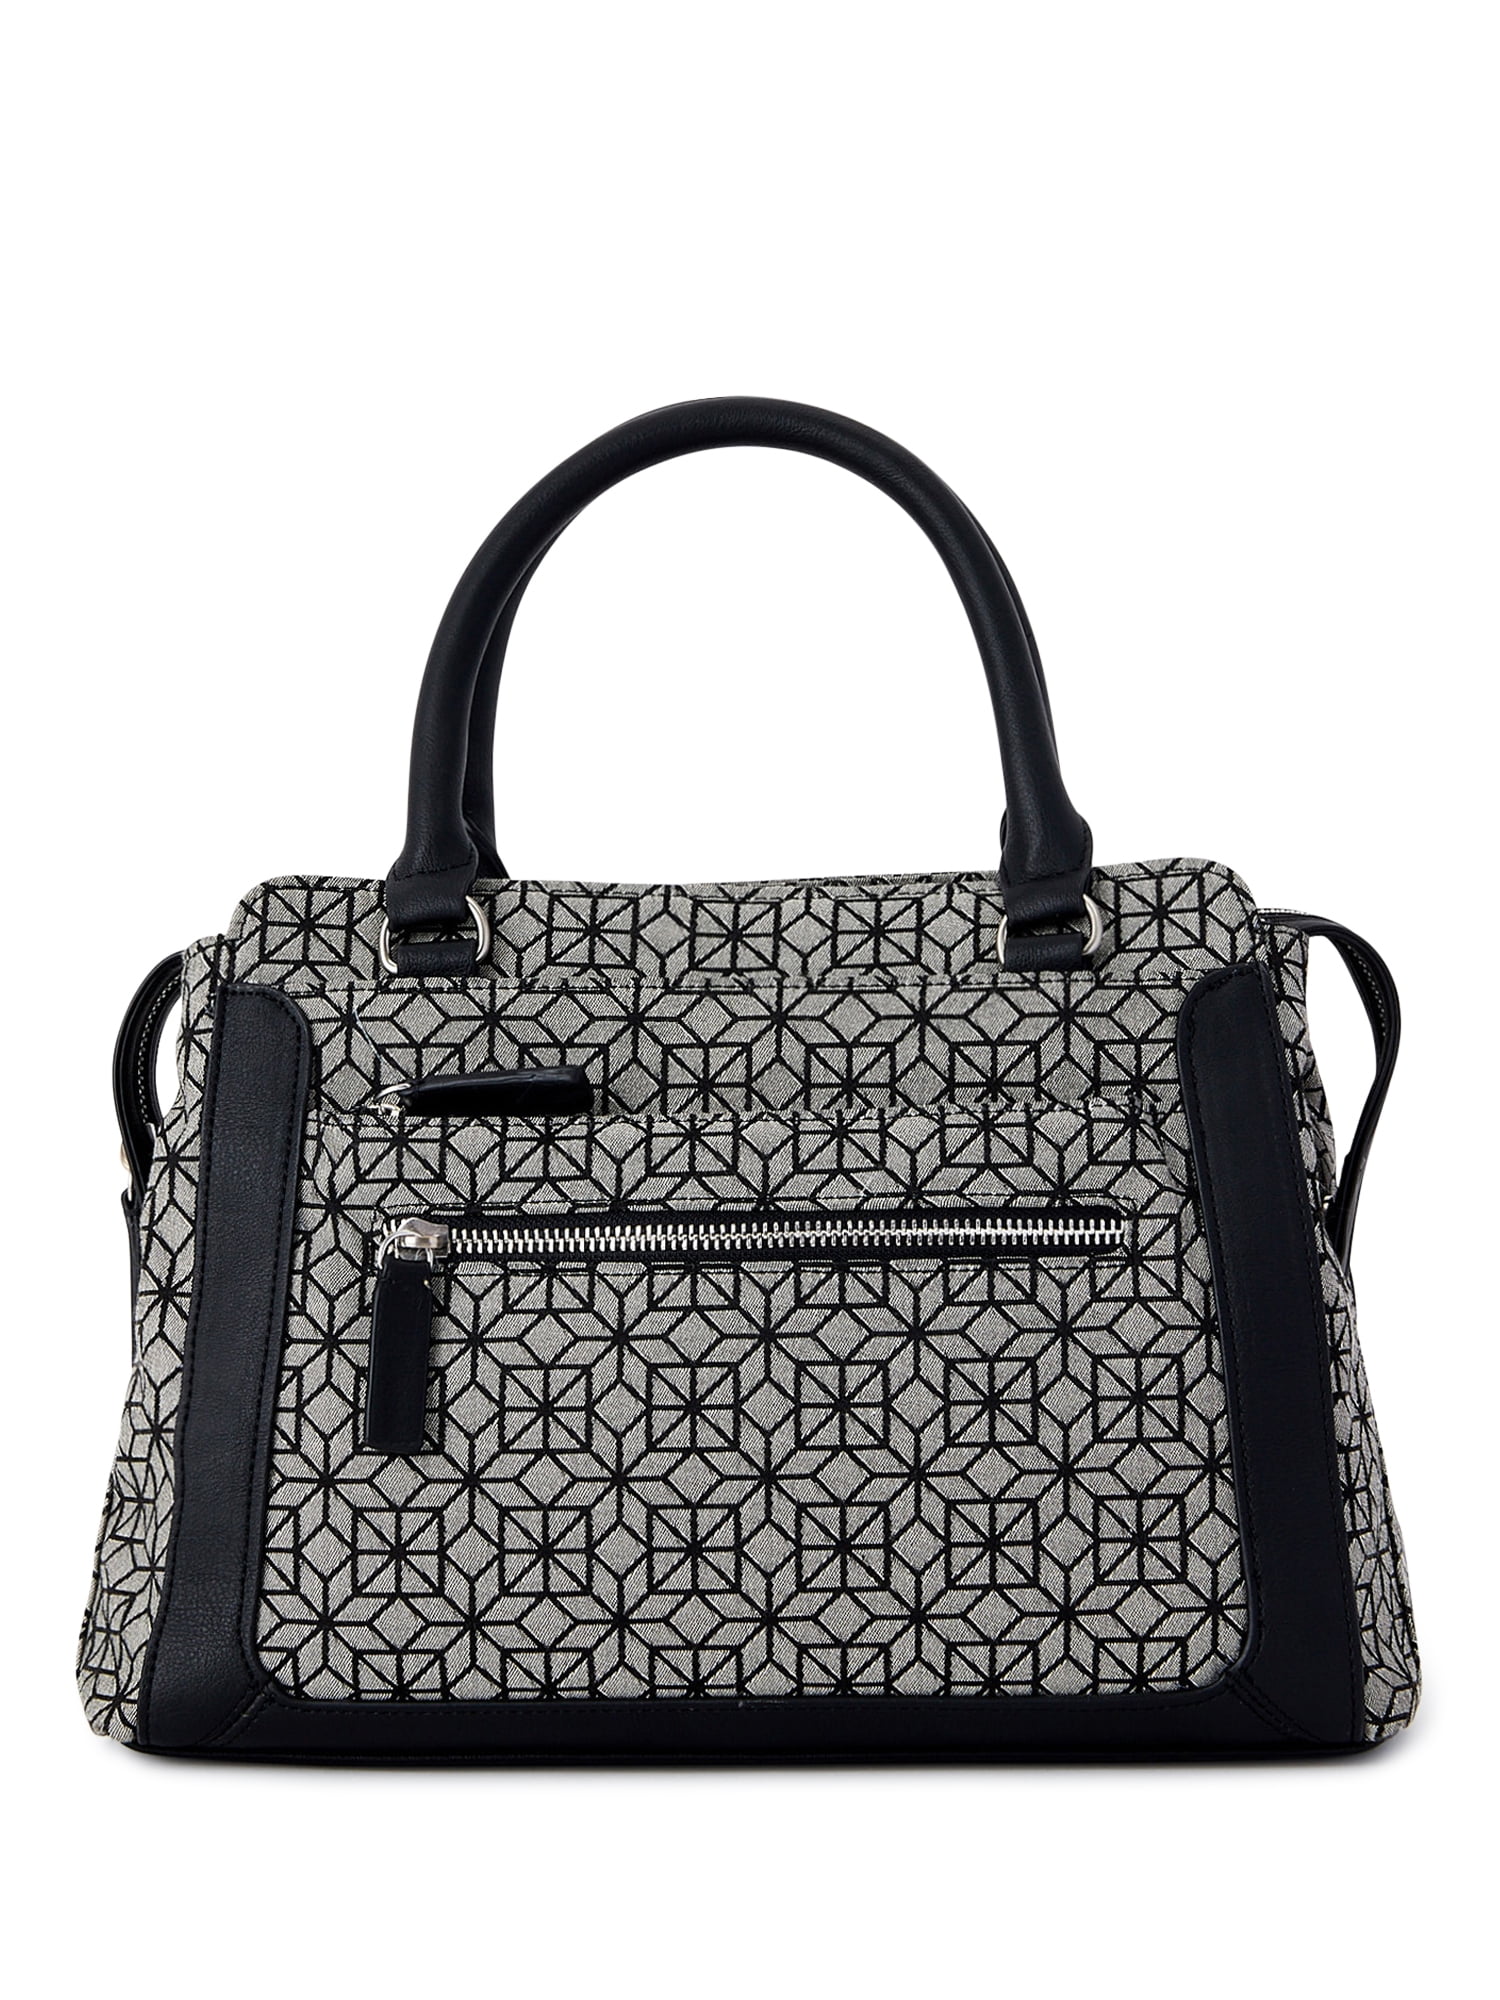 Time and Tru Women's Multi-Compartment Marli Convertible Satchel Handbag